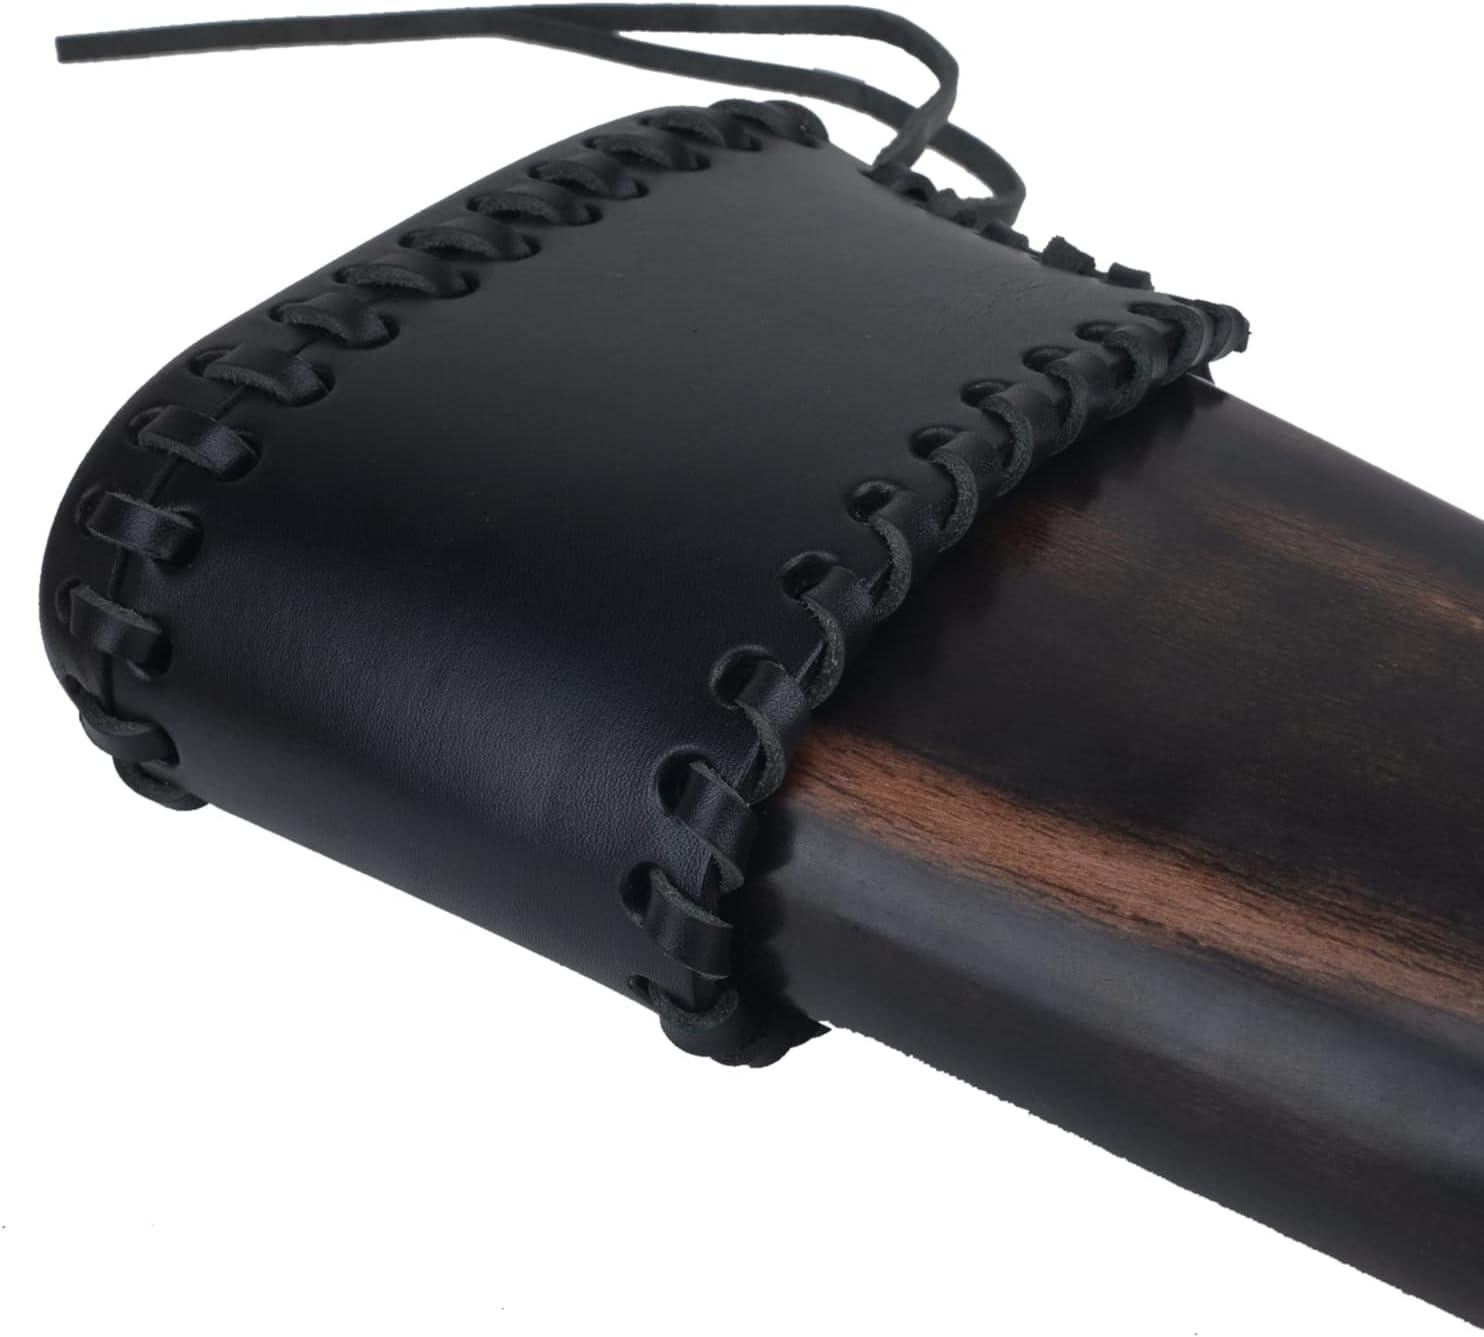 WEGU recoil pad Elastic adjustable - Stocks for Shotguns & Rifles - AKAH